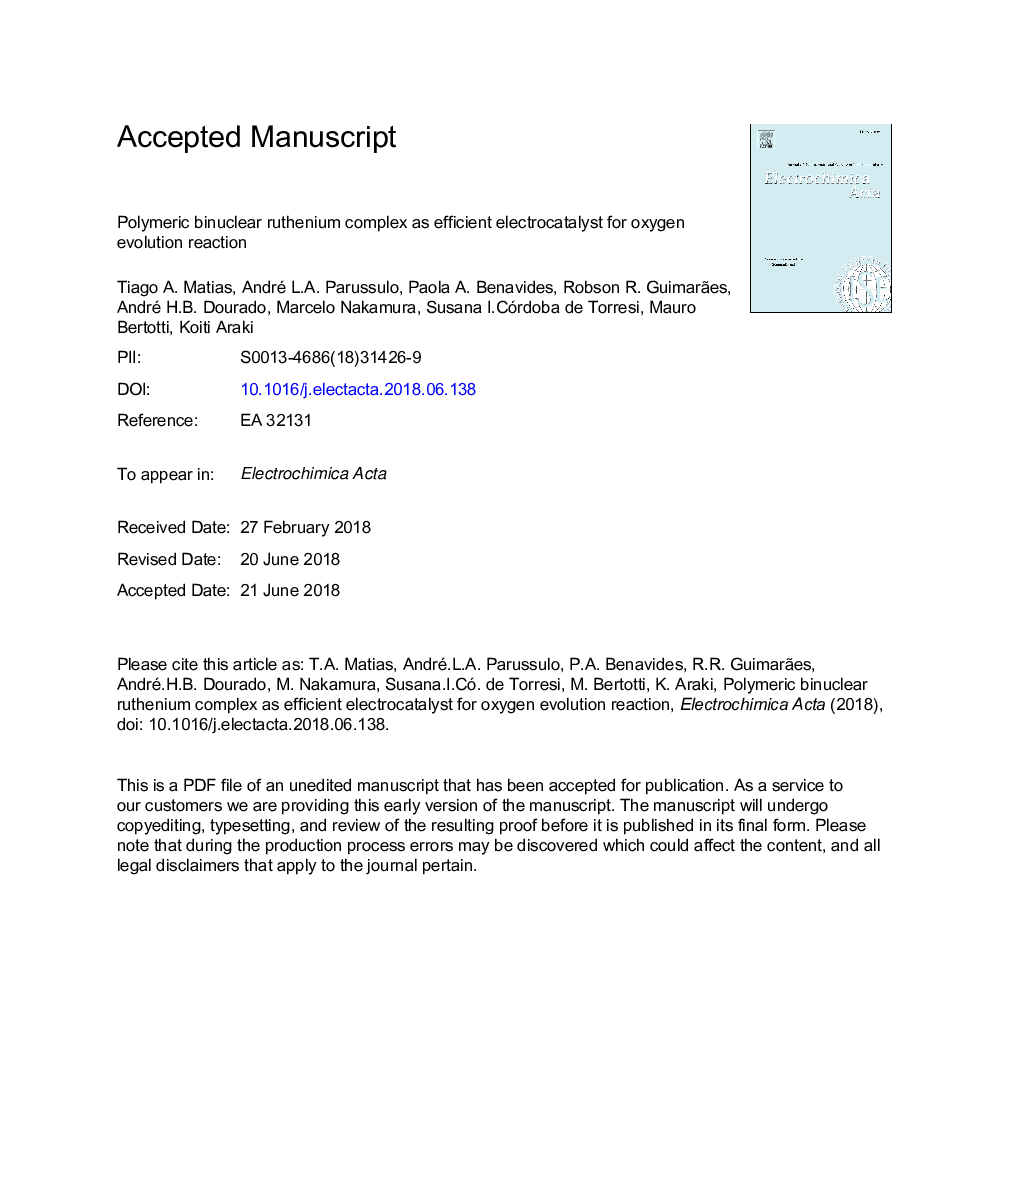 Polymeric binuclear ruthenium complex as efficient electrocatalyst for oxygen evolution reaction